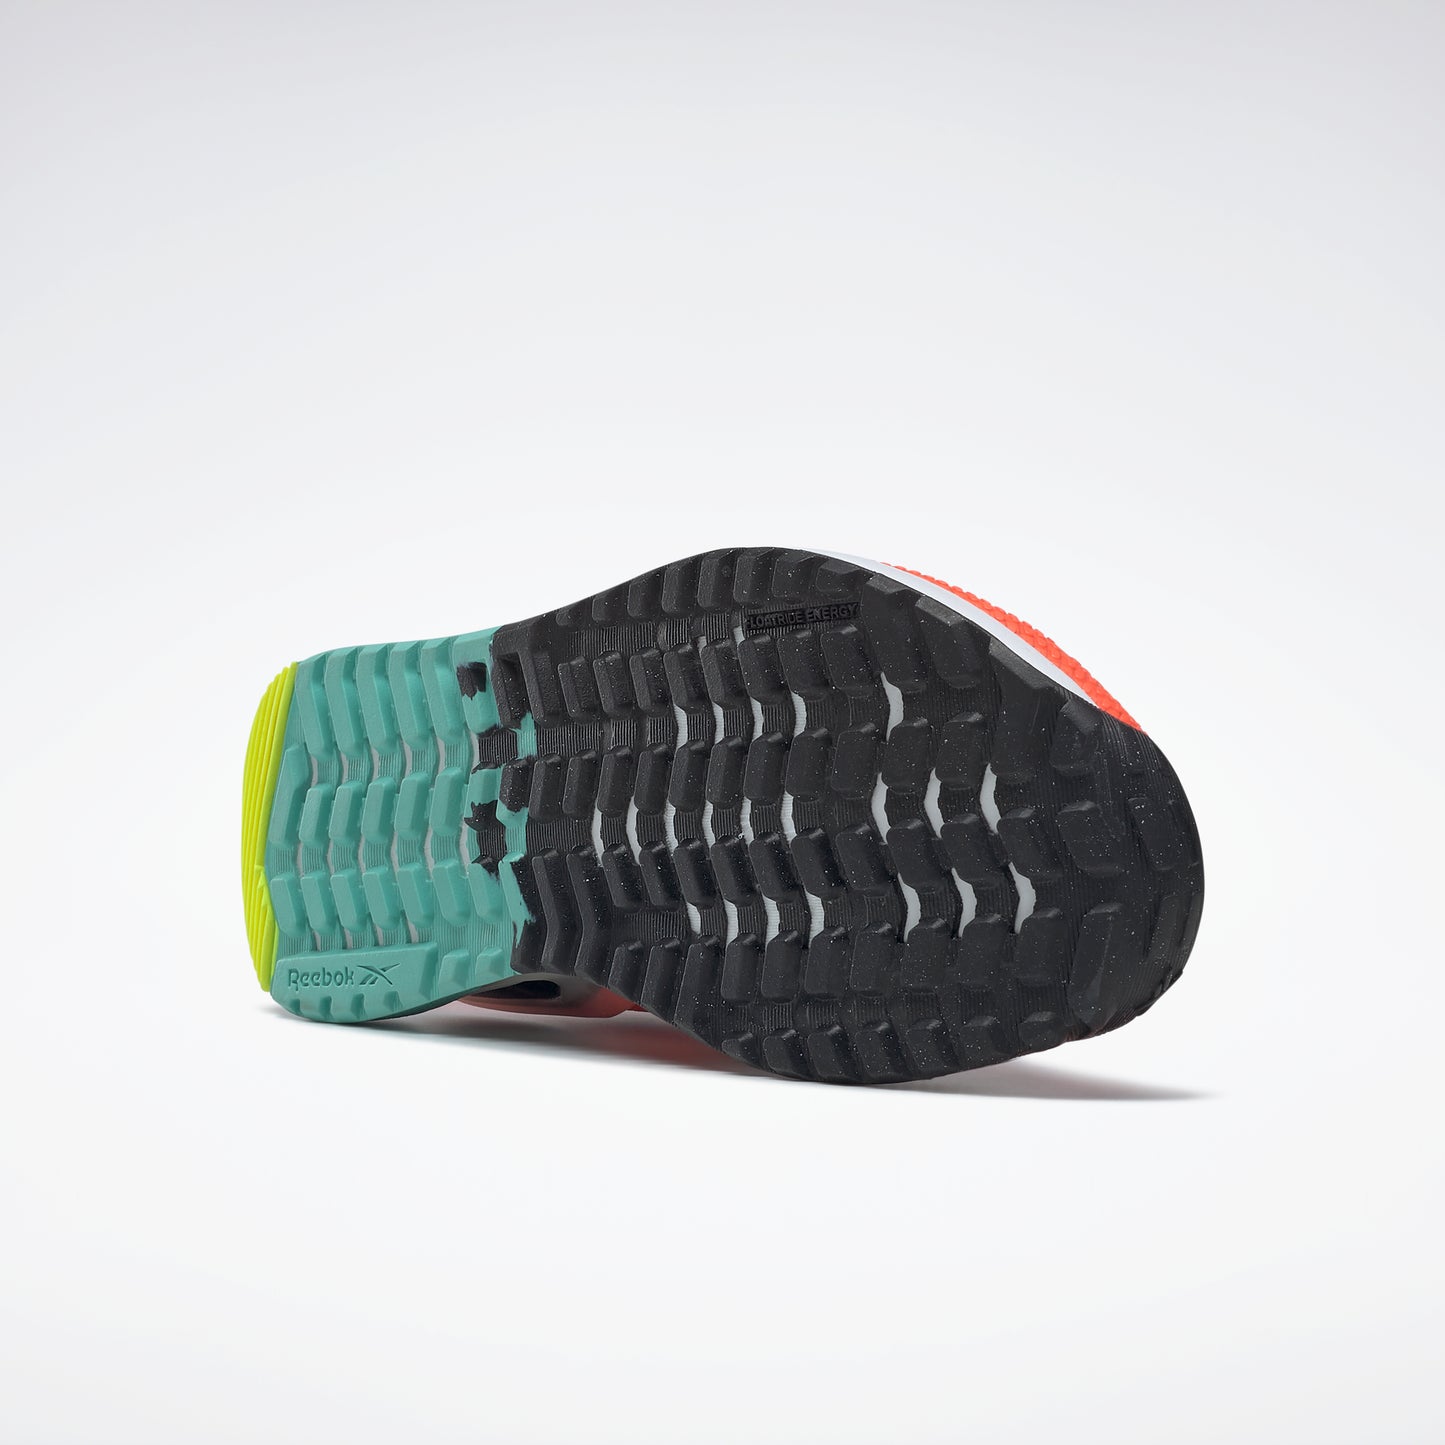 Chaussures Reebok Footwear Women Nano X2 Tr Adventure Shoes Orgfla/Cblack/Soacye